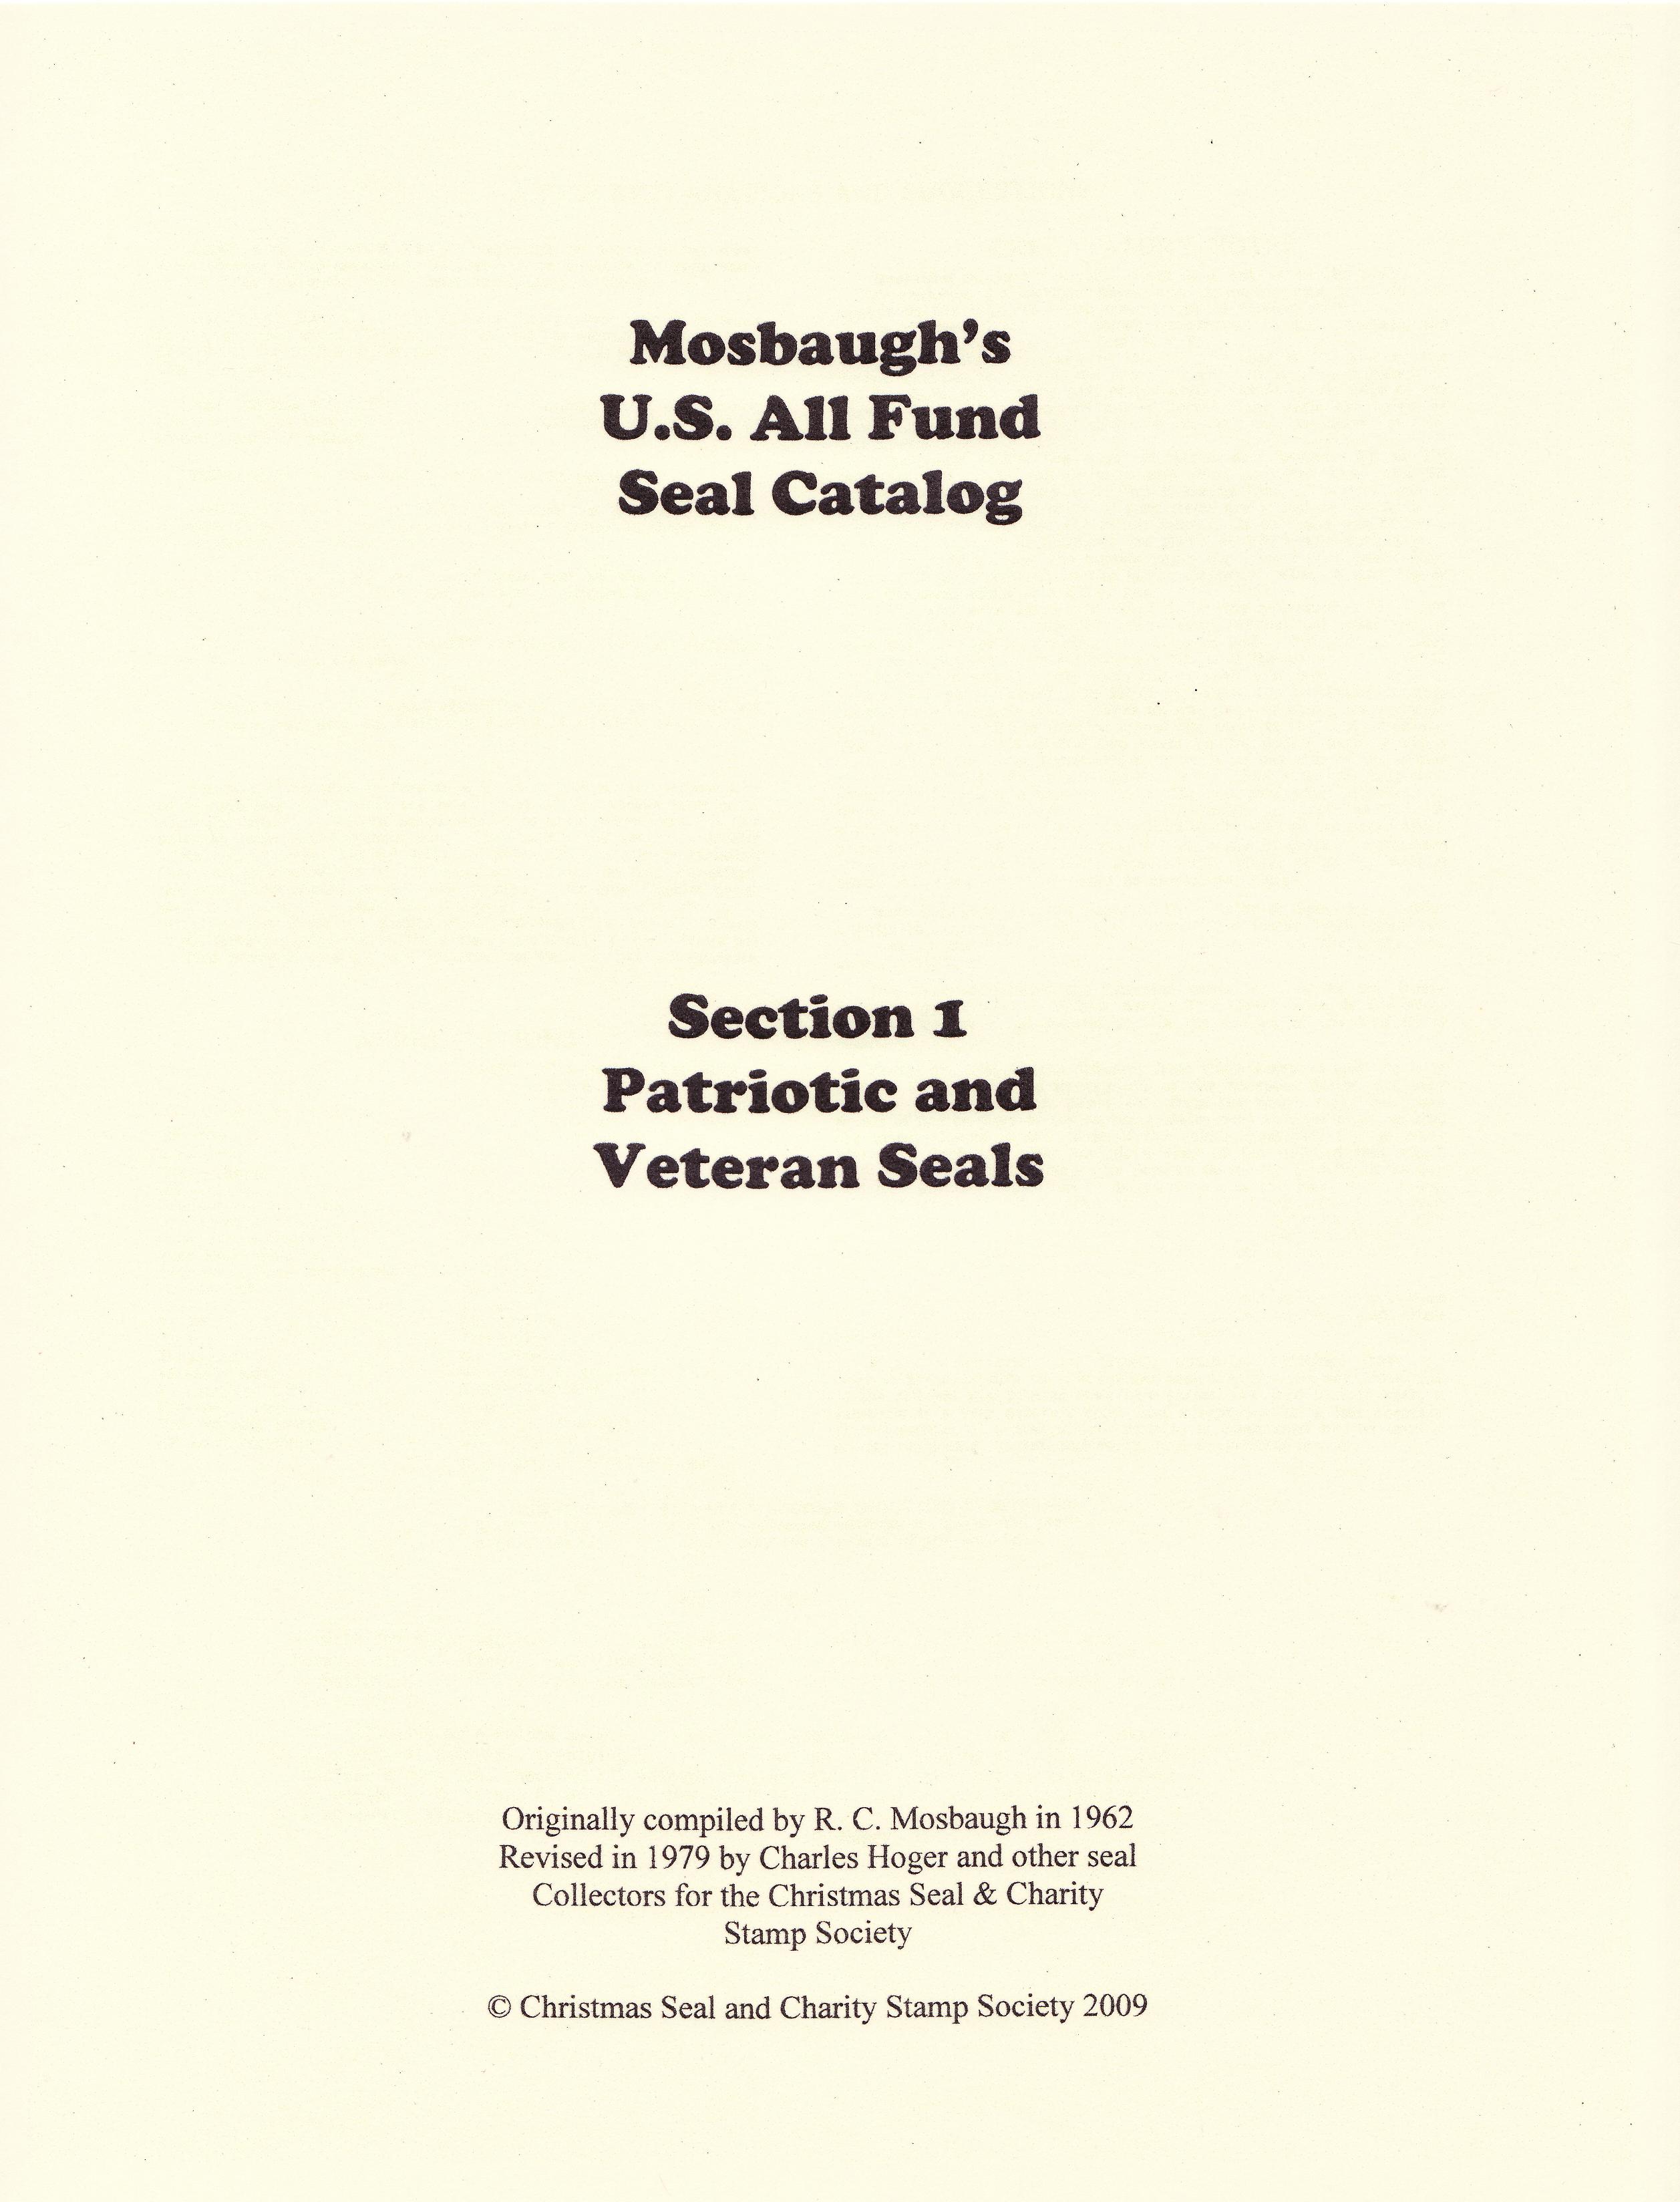  Mosbaugh's Catalog, Sec.  1, Patriotic & Veteran's Charity Seals, Rev. 1979